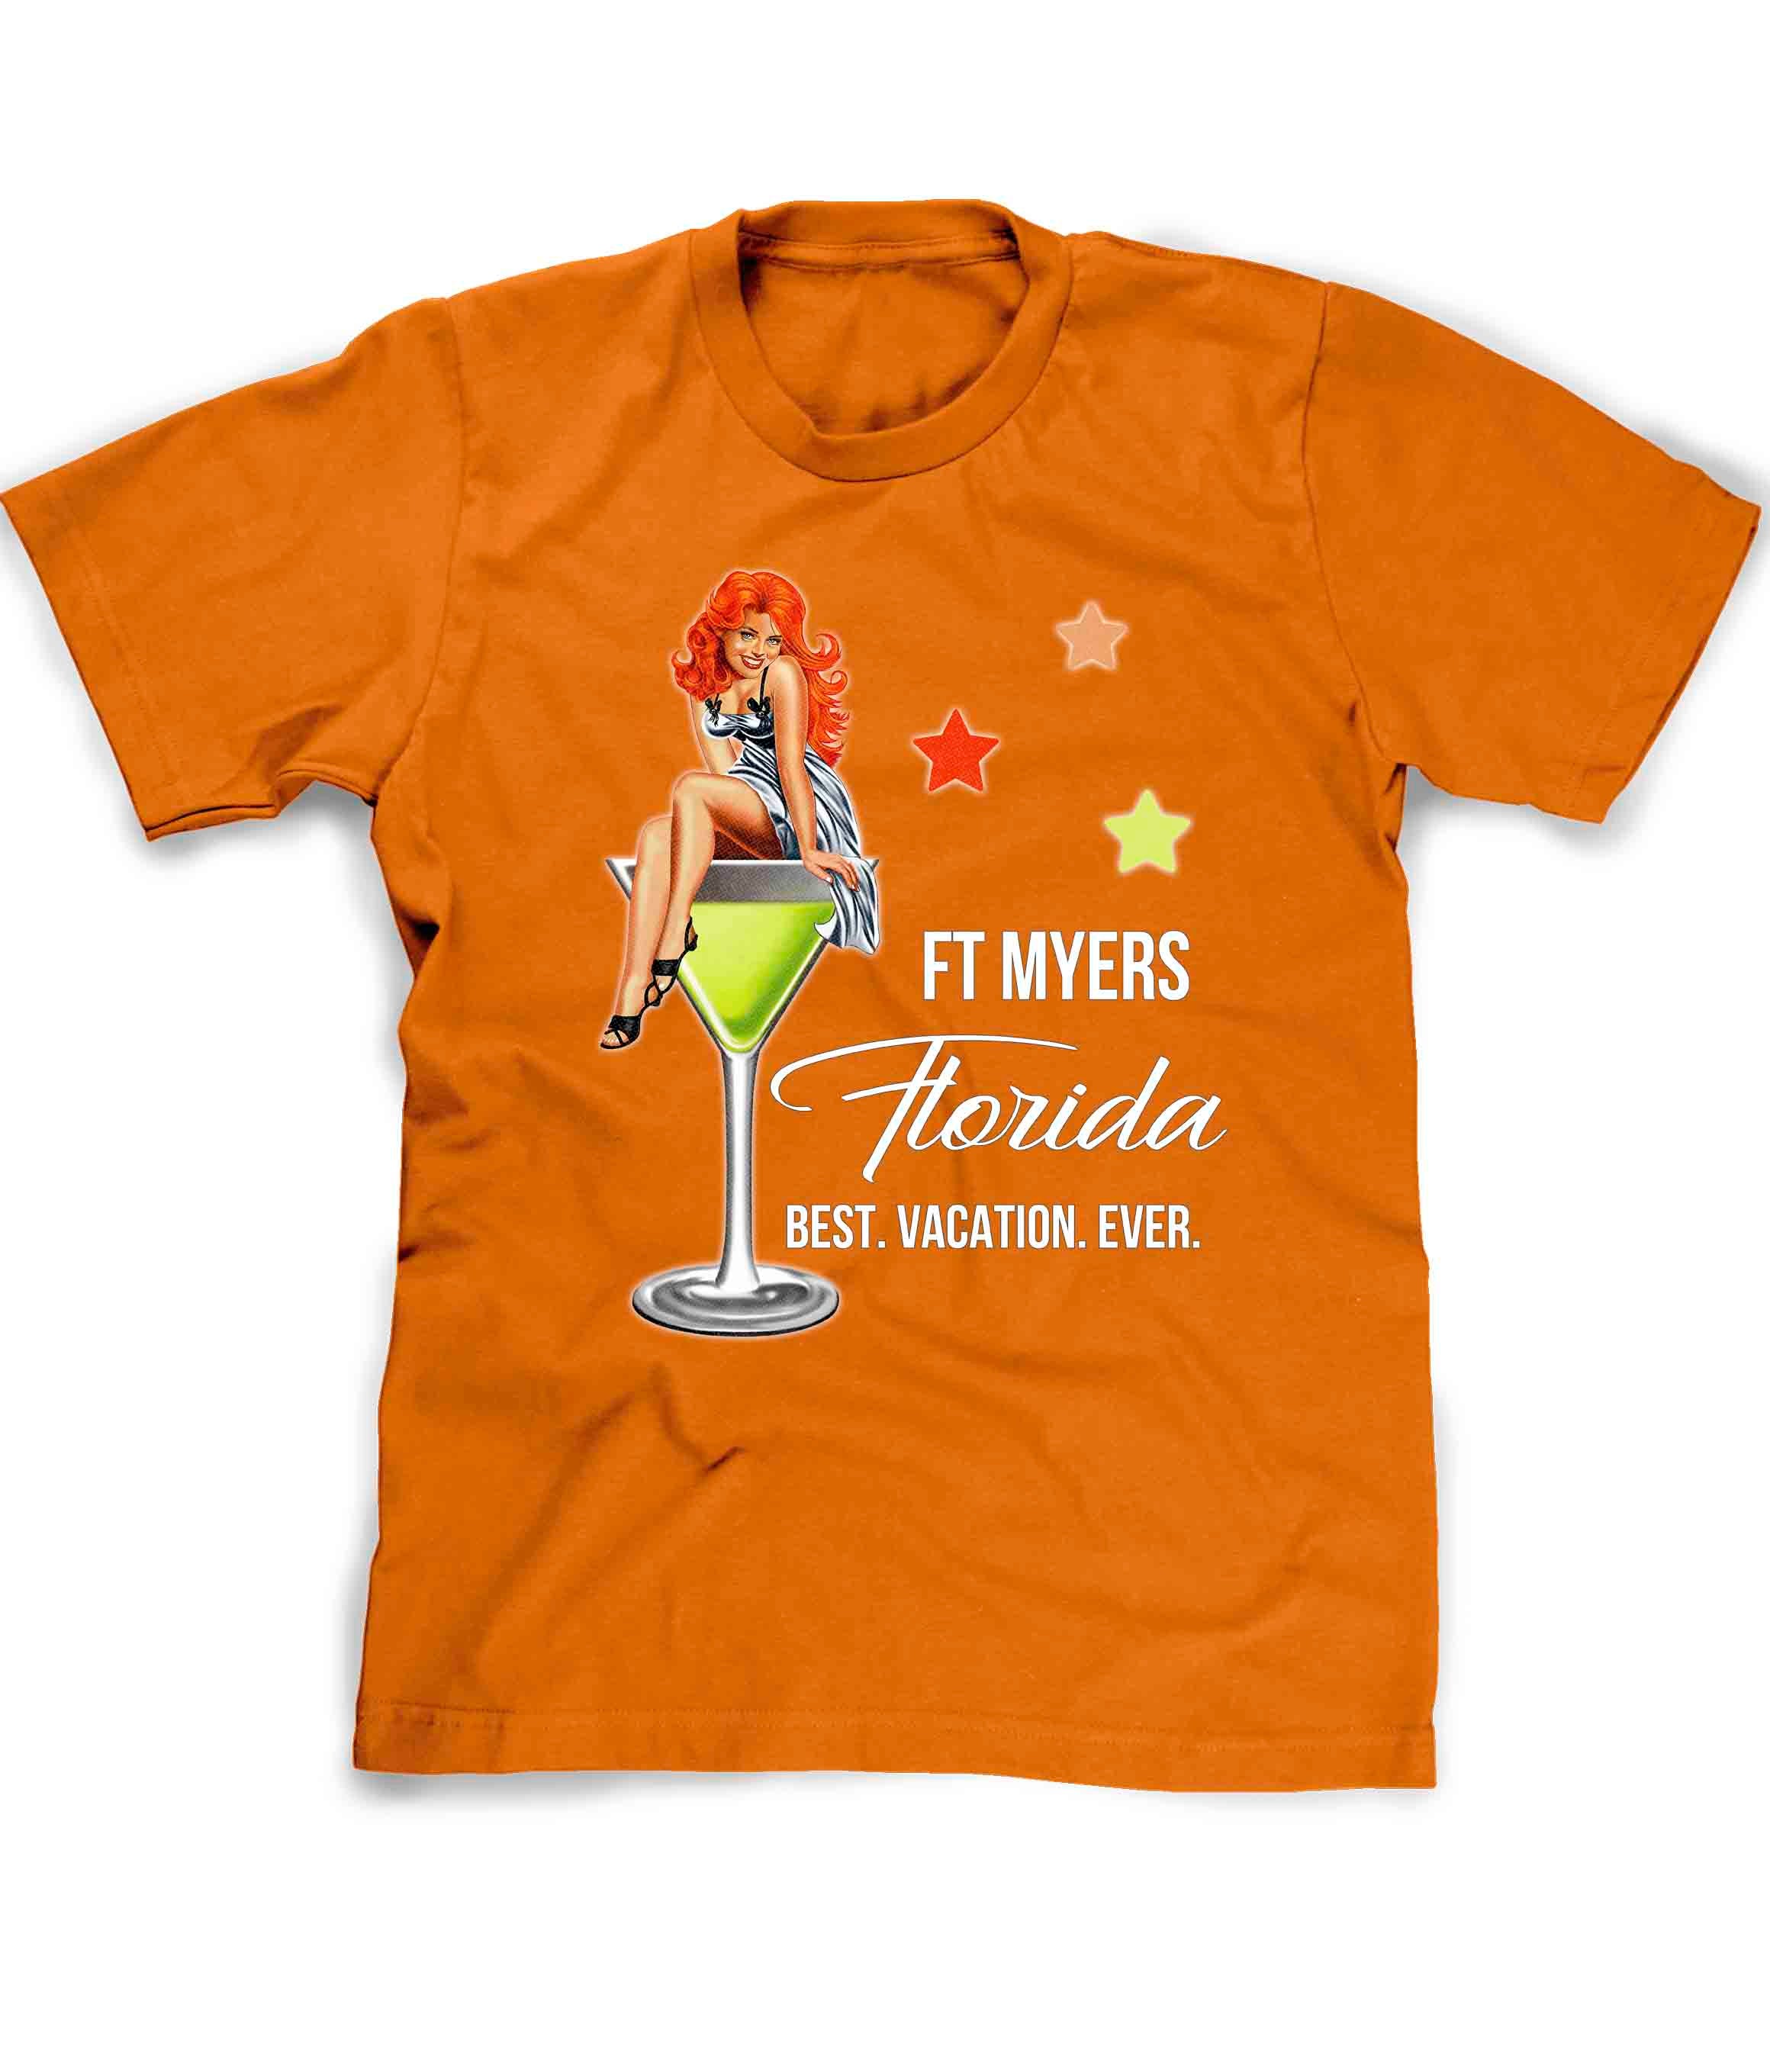 Ft Myers Florida Shirt in orange - custom